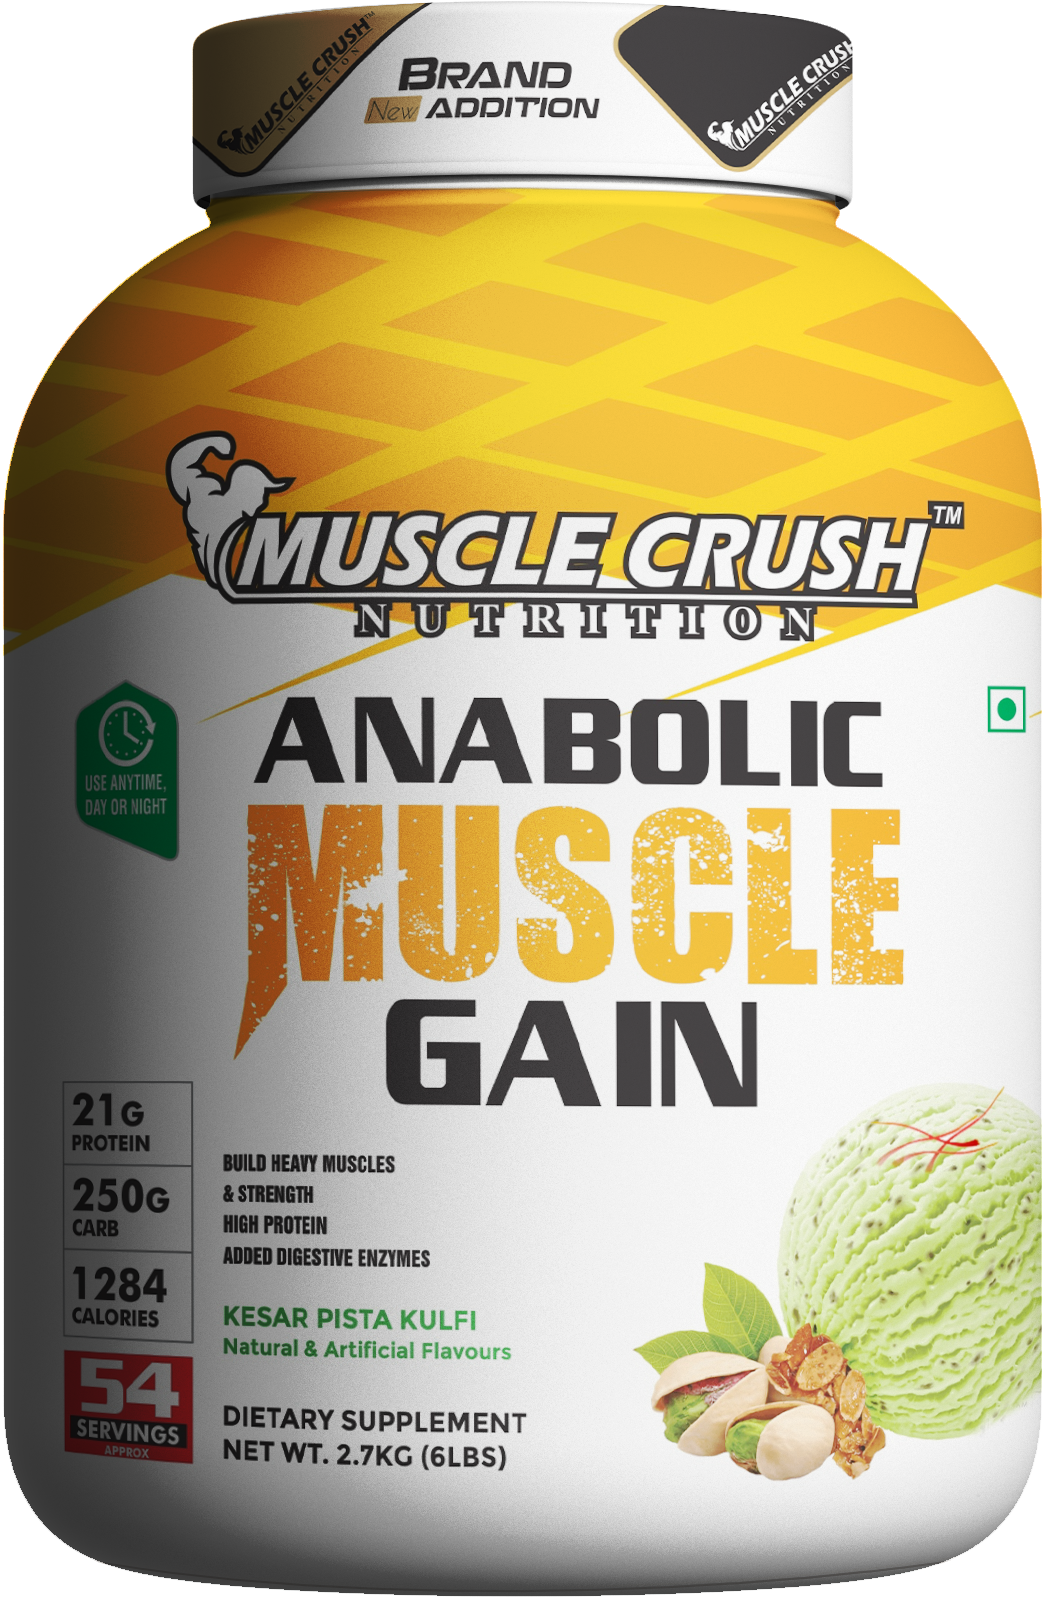 Anablolic Muscle Gain